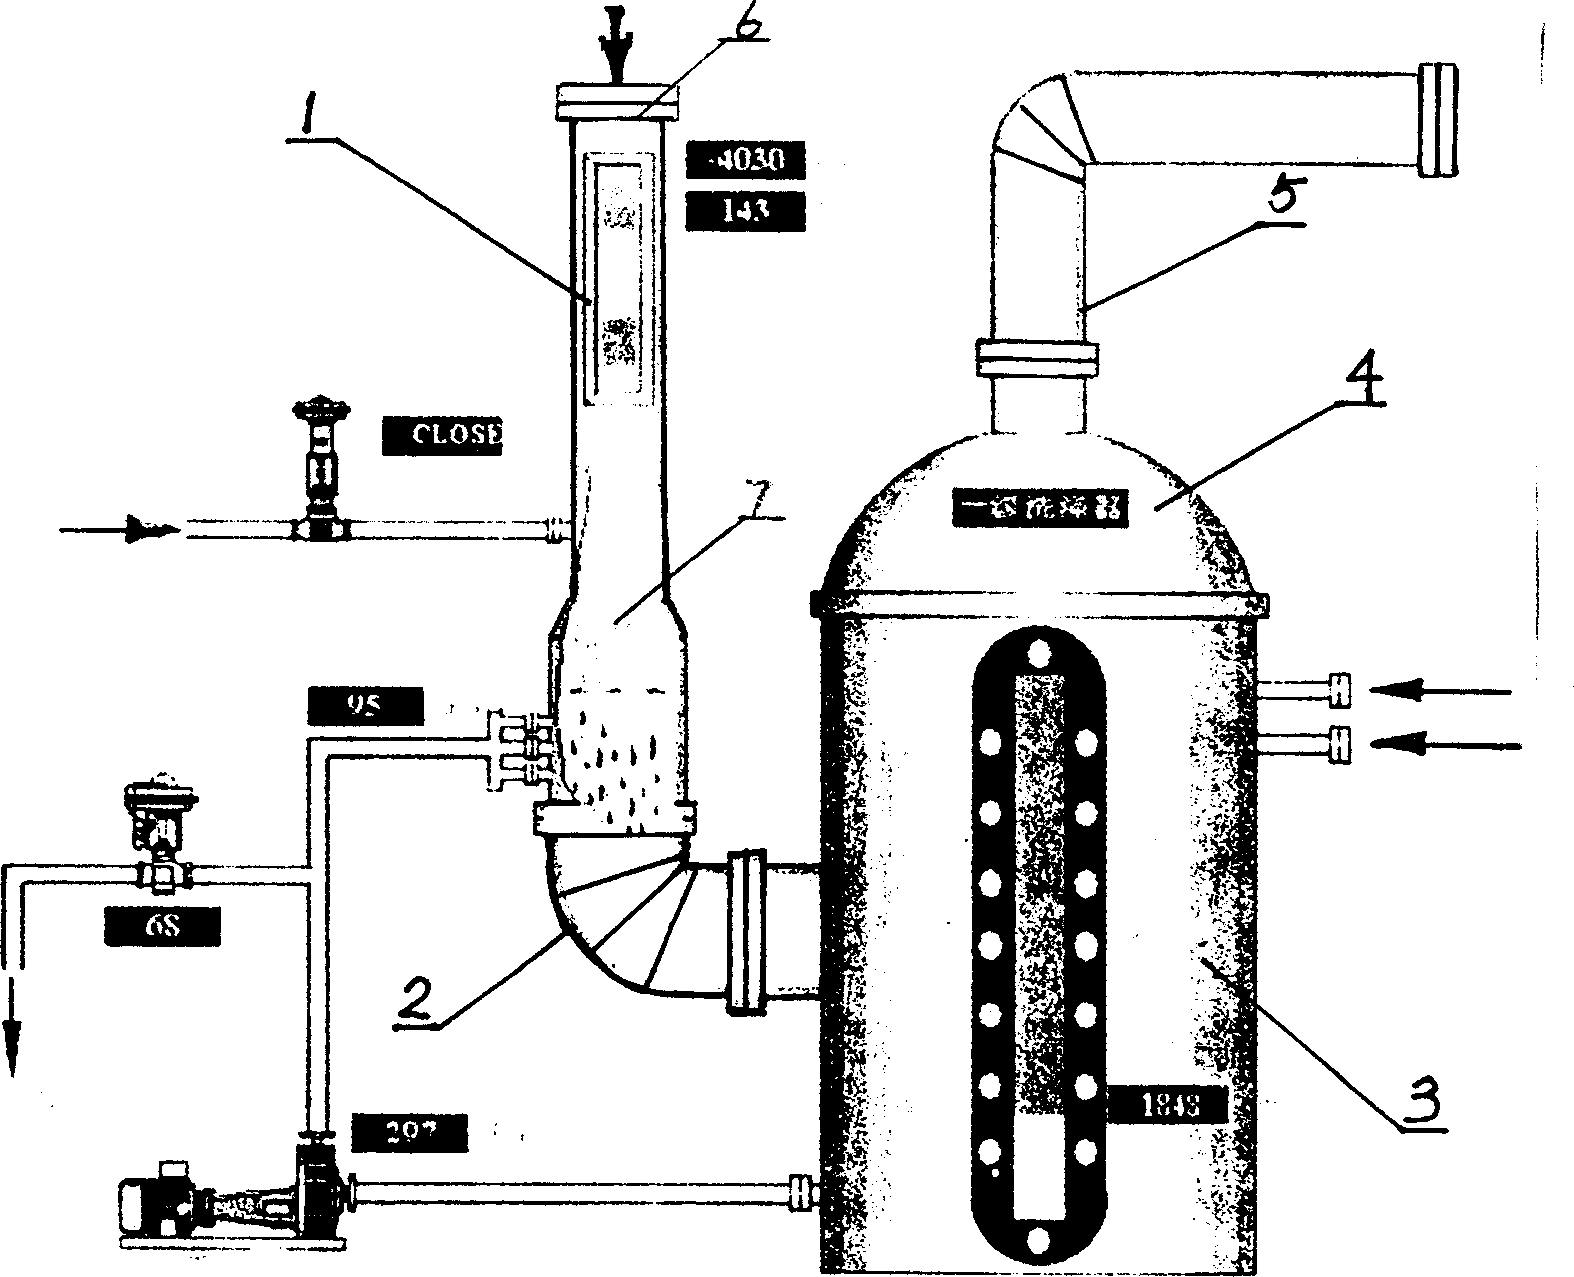 Turbulent_washing gas treating apparatus